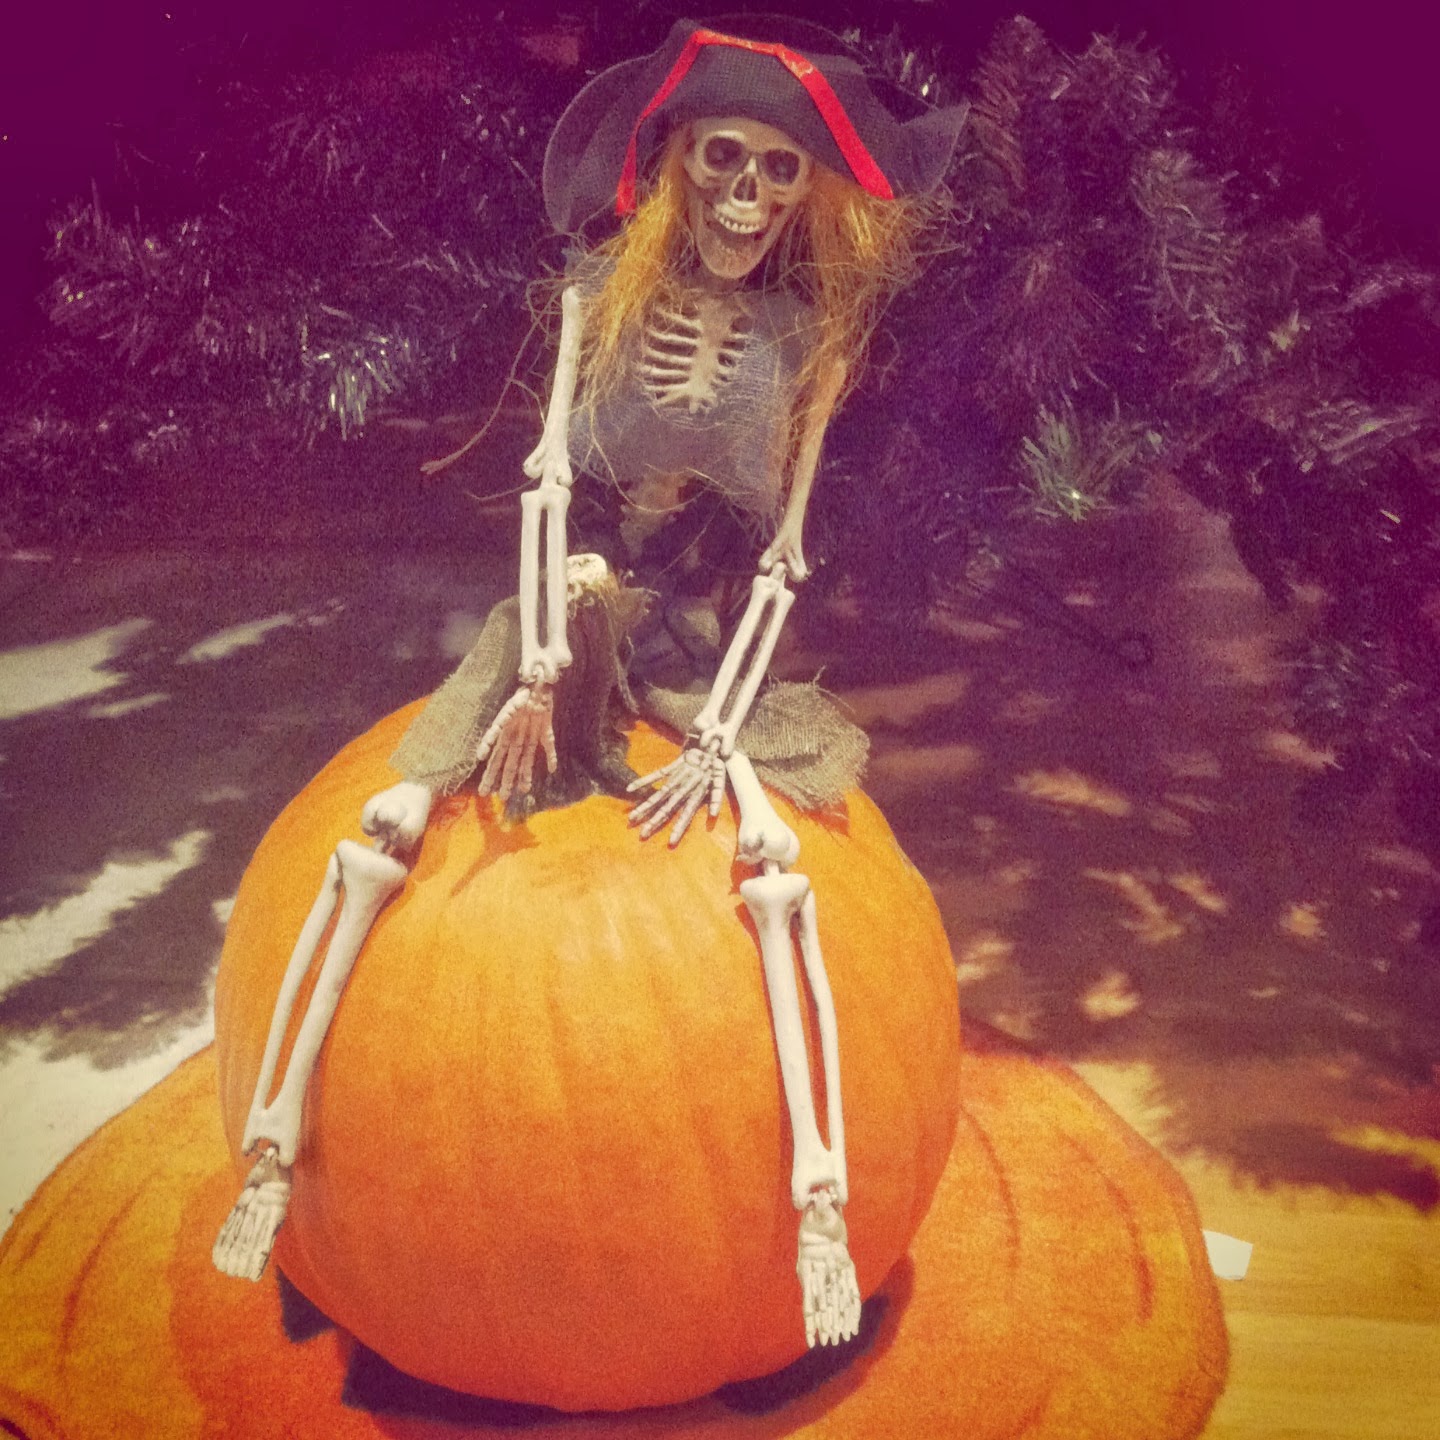 Skeletor and a Pumpkin